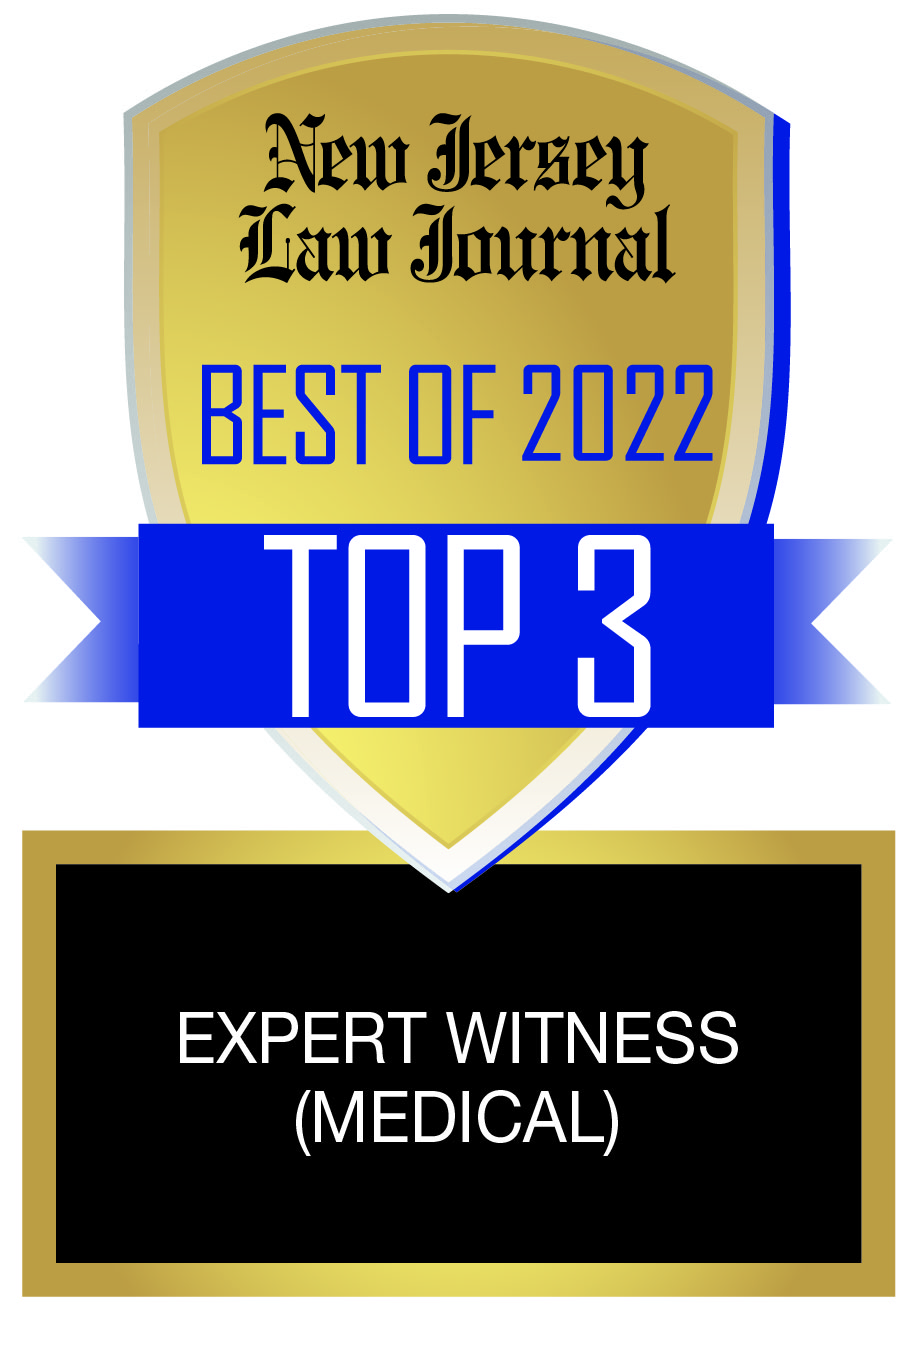 New Jersey Law Journal - Expert Witness Best of 2022